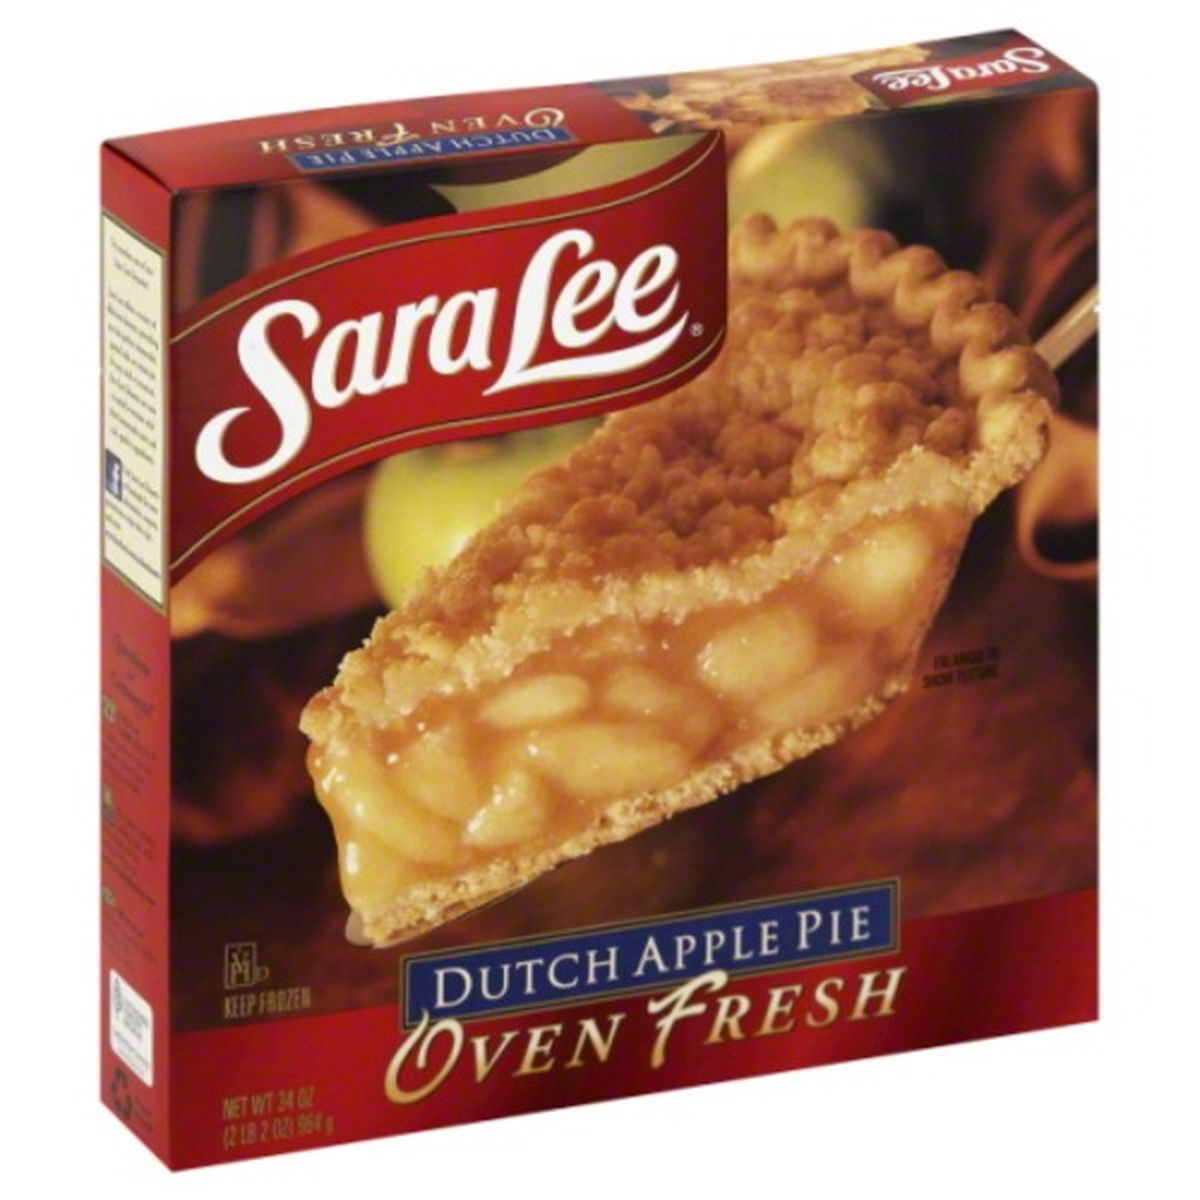 Calories in Sara Lee Oven Fresh Pie, Dutch Apple